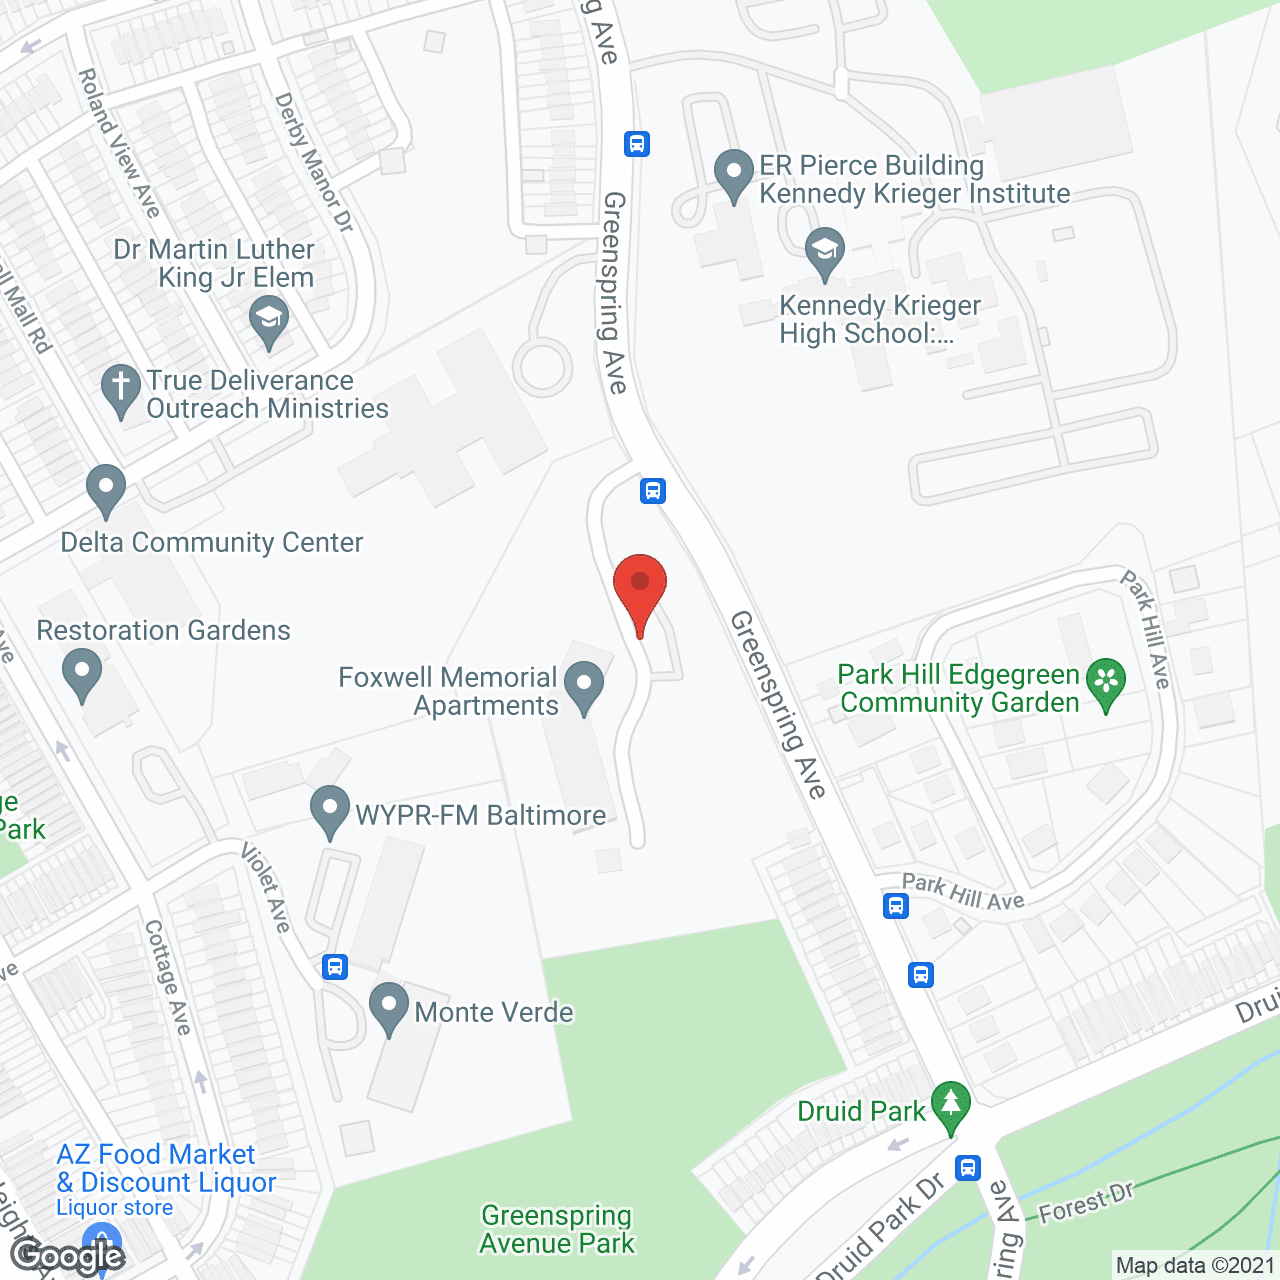 Foxwell Memorial Apartments in google map